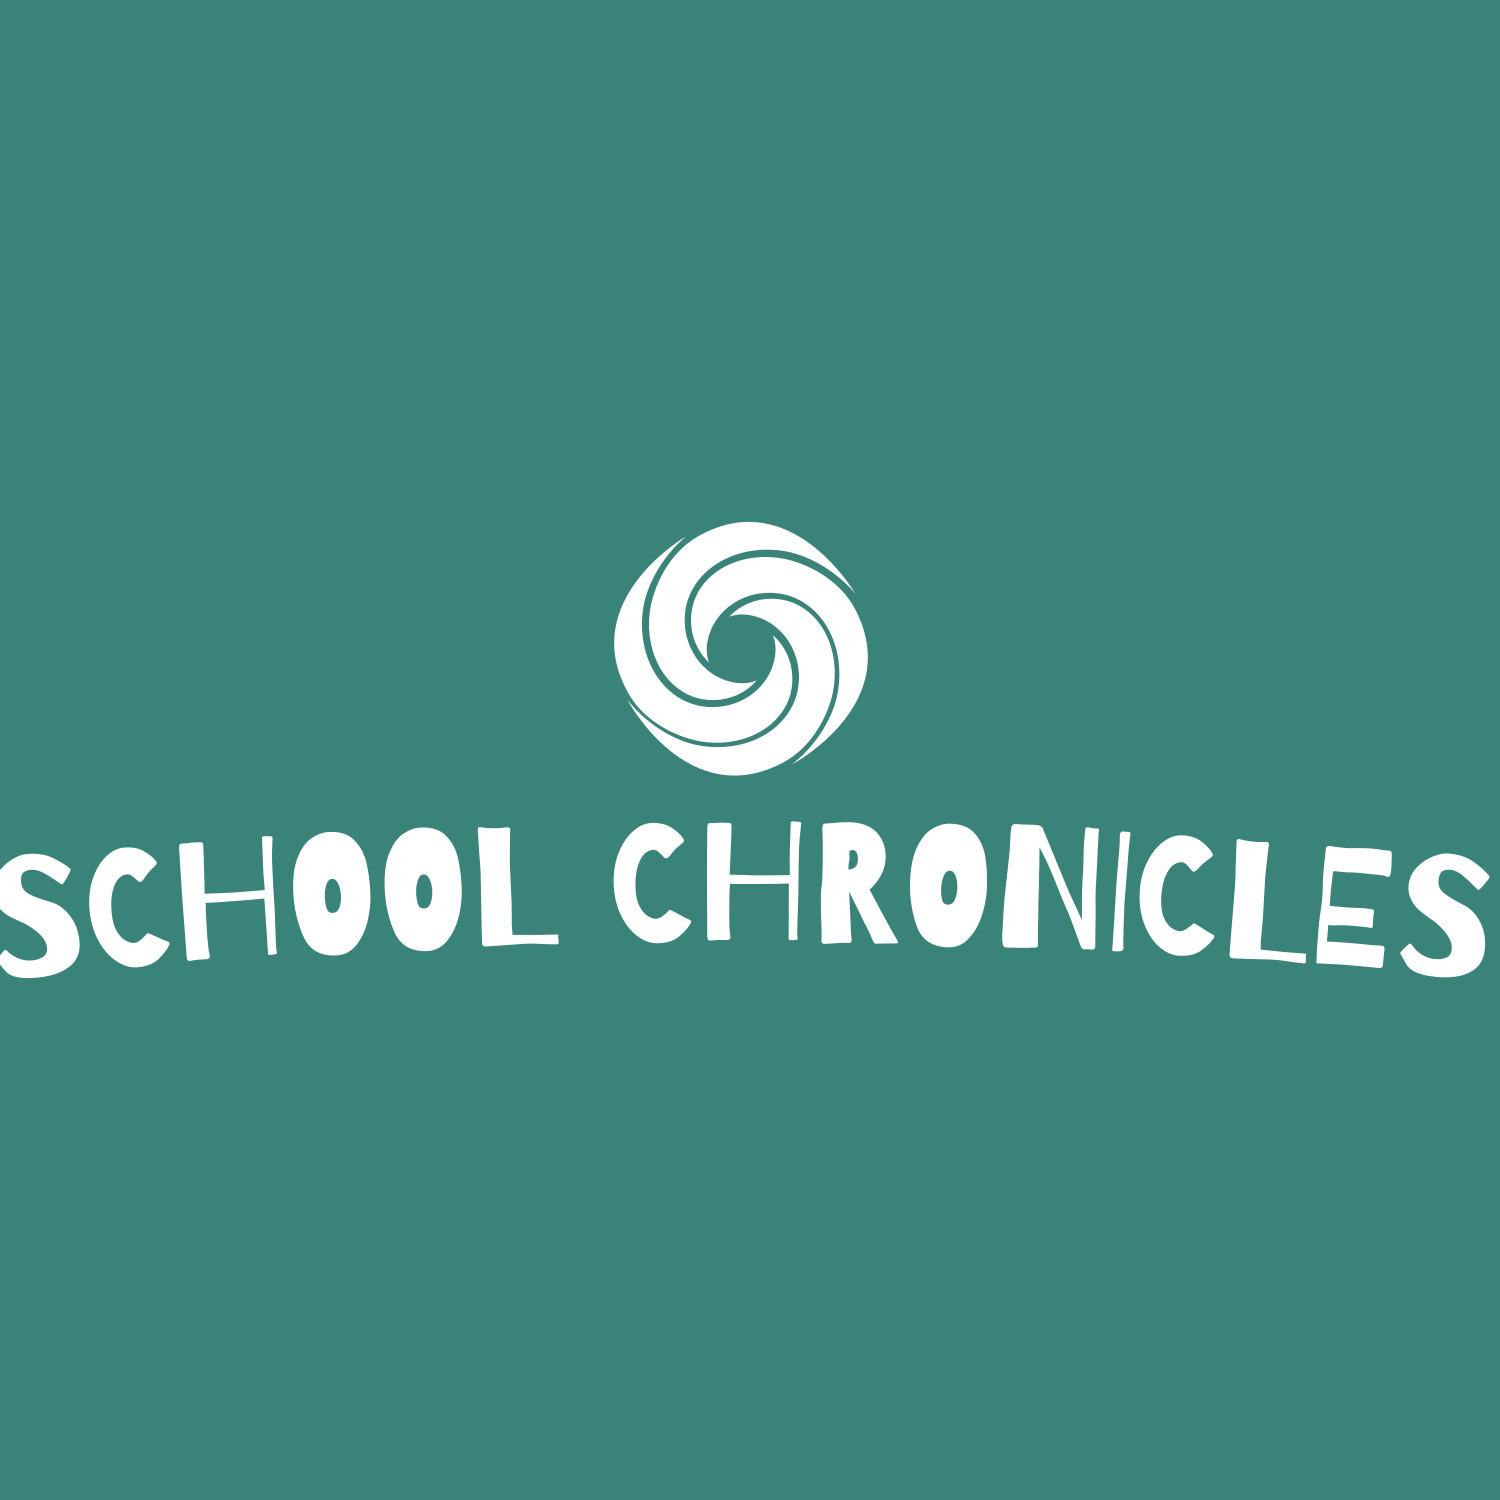 School Chronicles